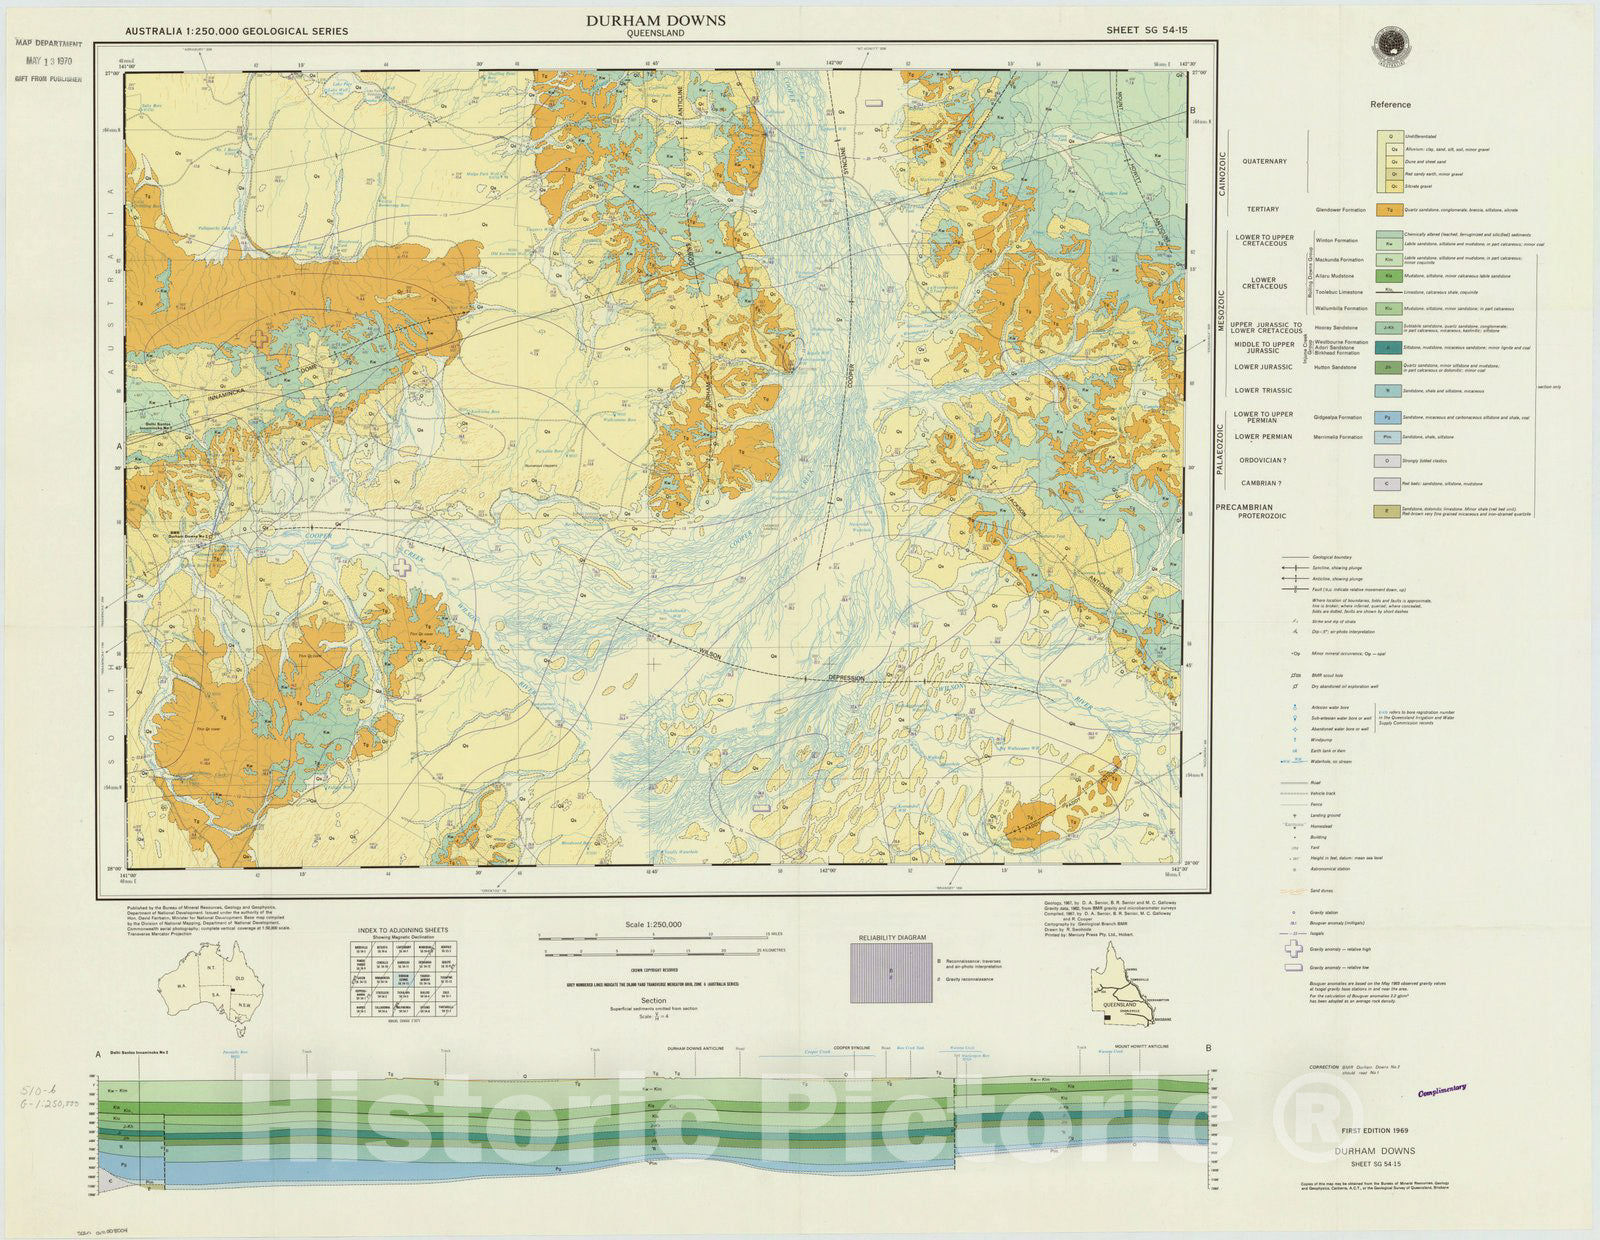 Map : Durham Downs, Queensland 1969, Australia 1:250,000 Durham Downs, Queensland , Antique Vintage Reproduction